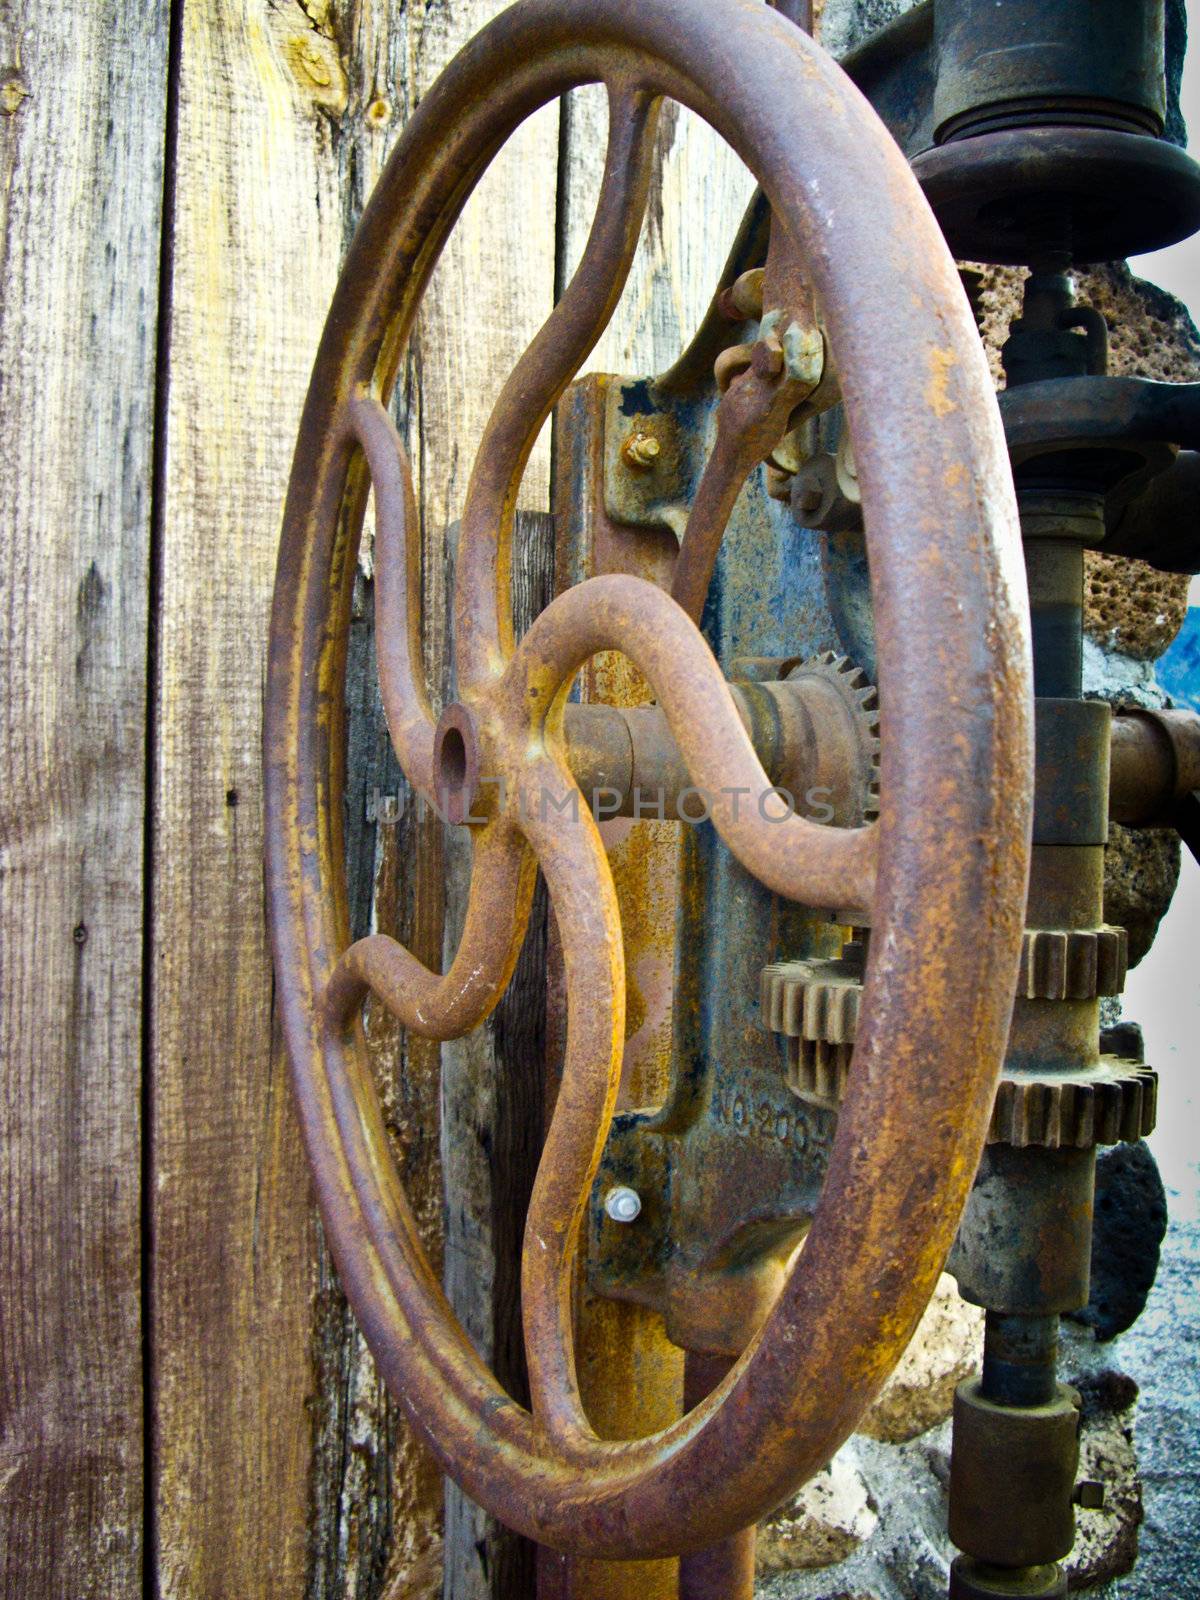 Wheel of old metal drill press